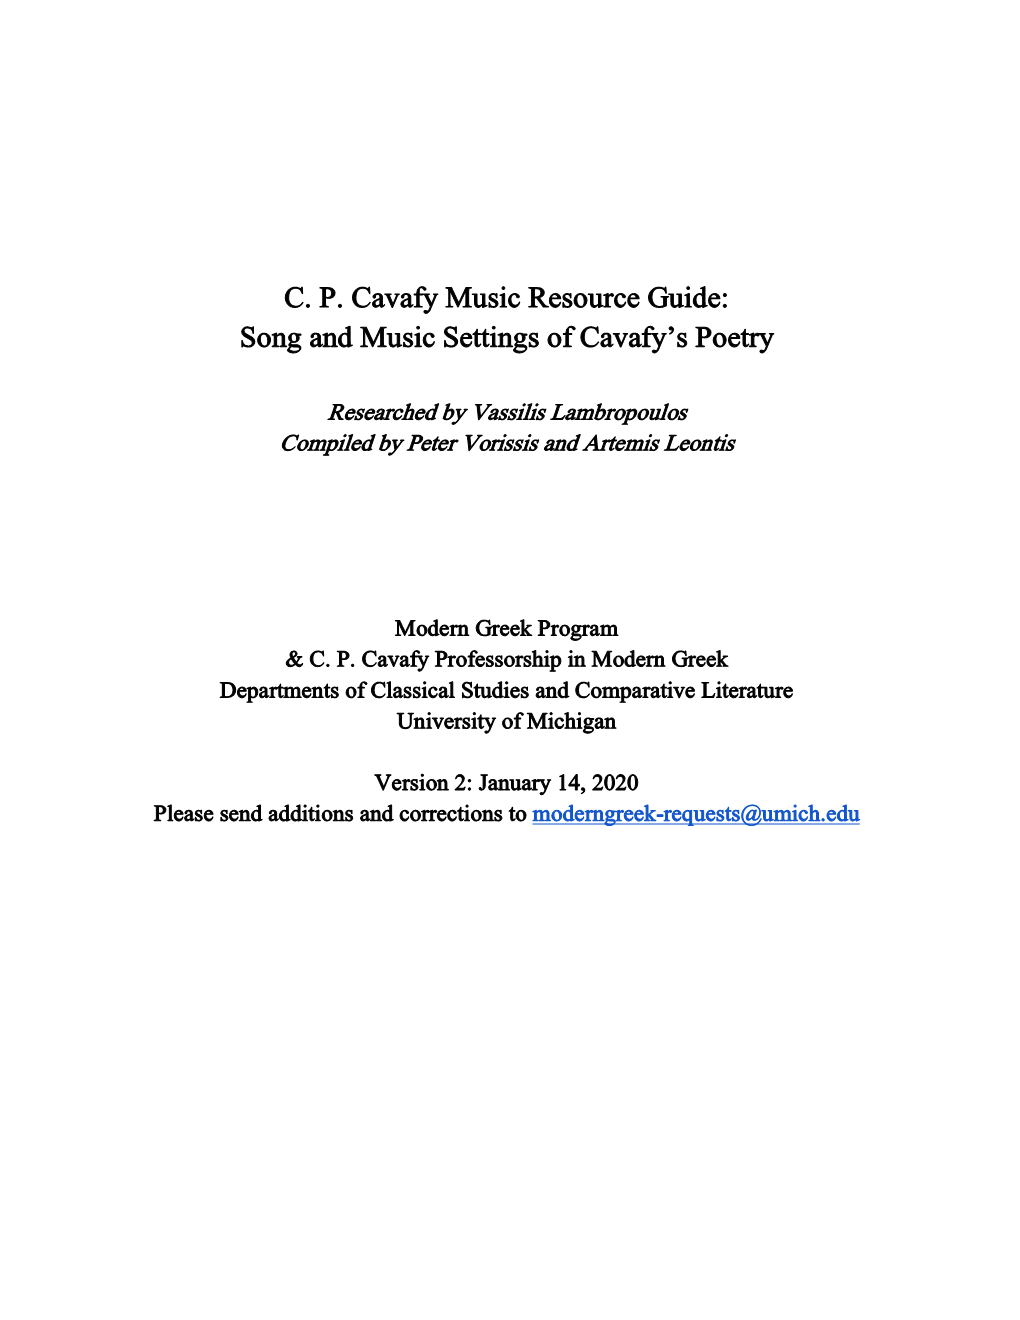 CP Cavafy Music Resource Guide